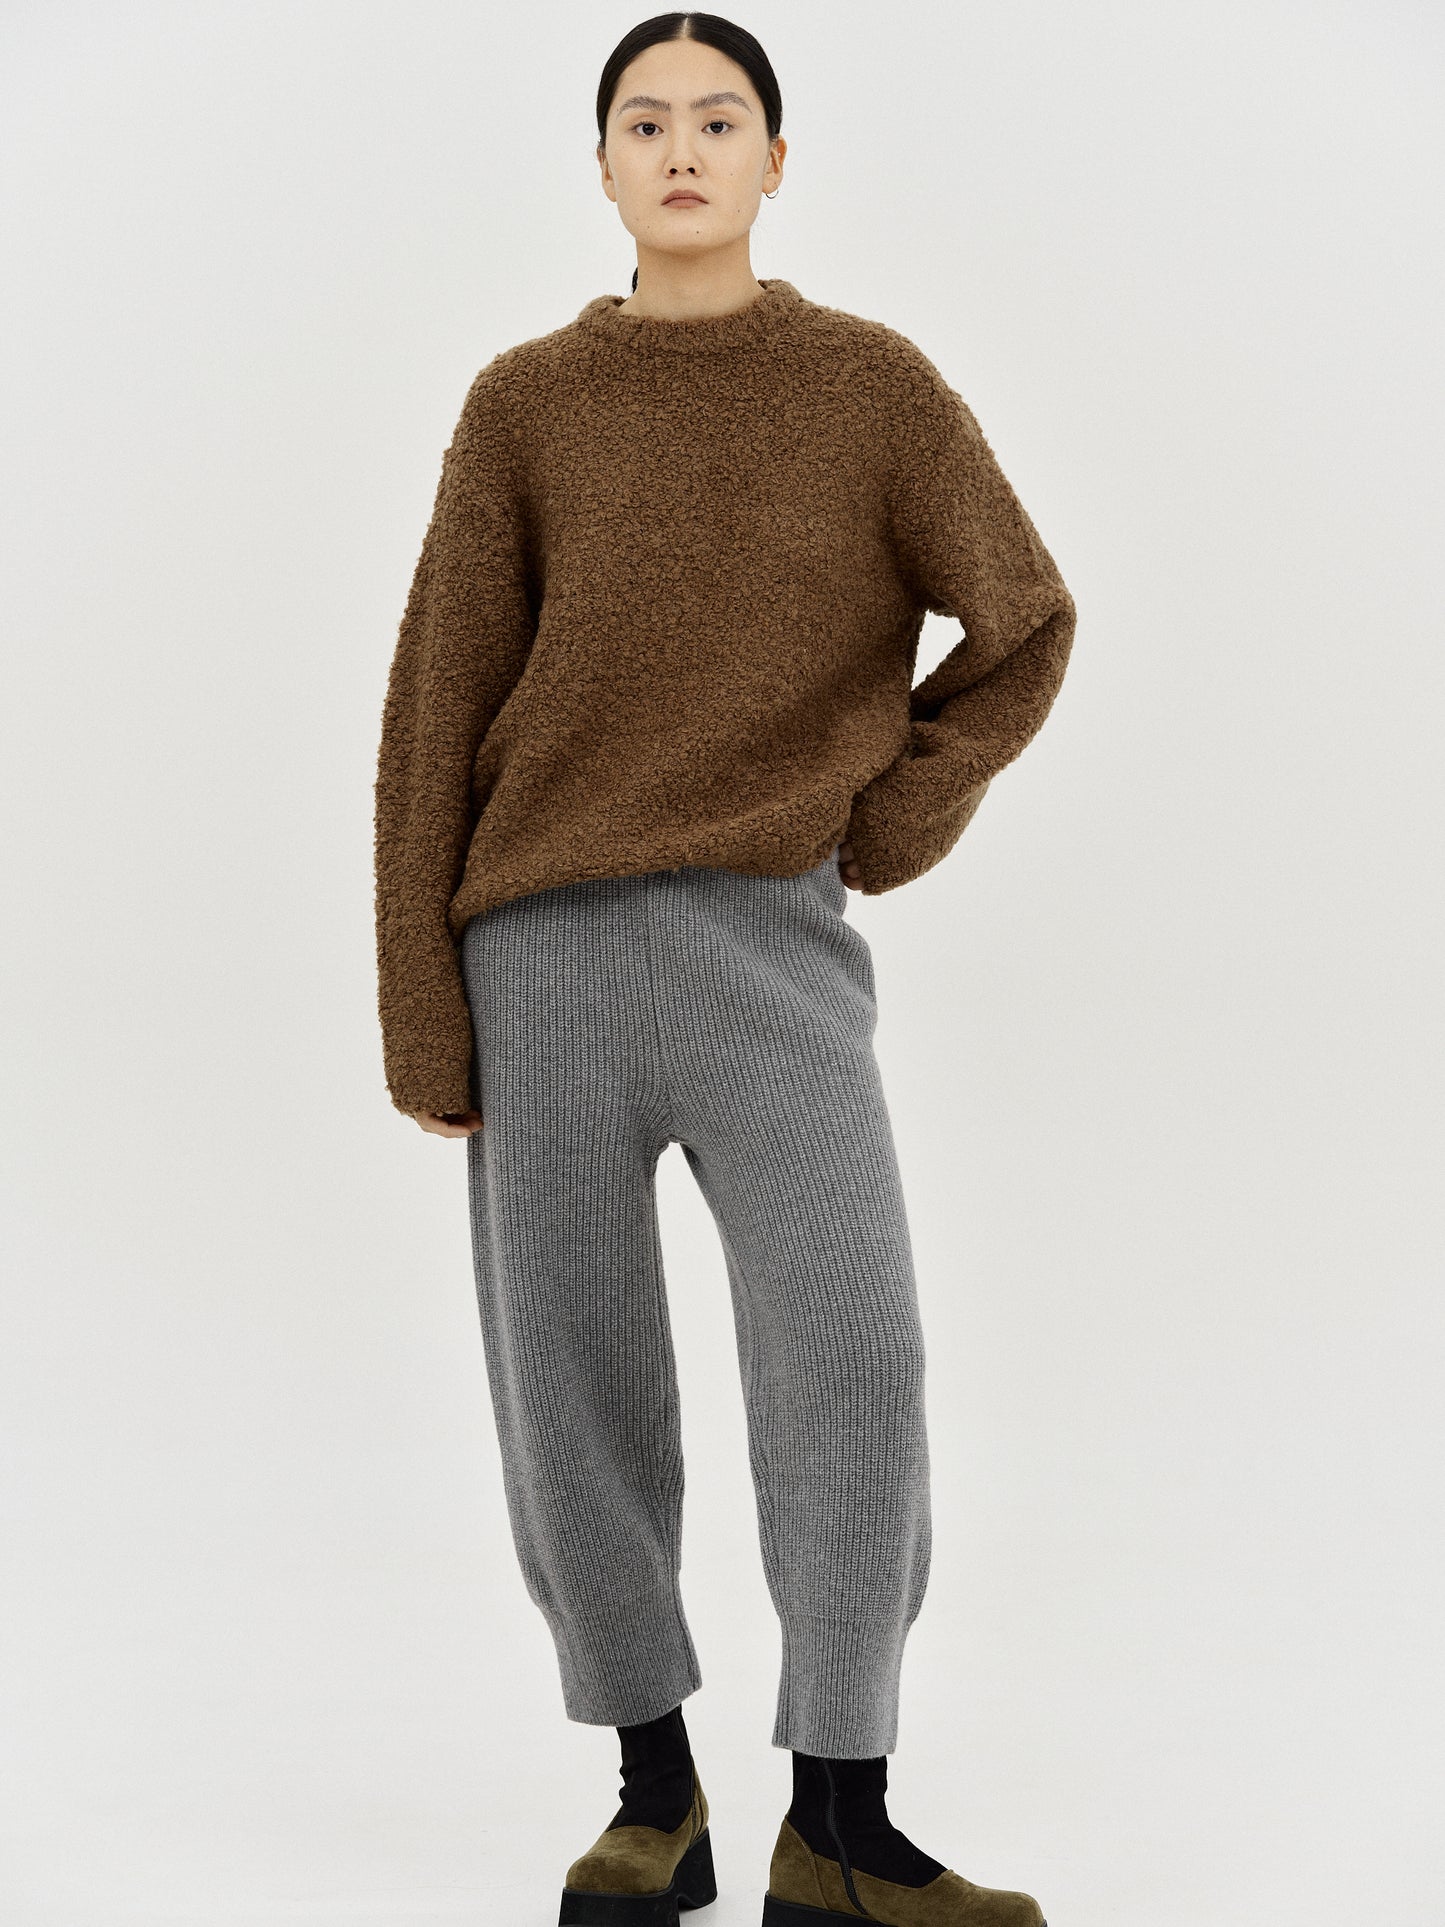 Wool Jogger Lounge Pants, Grey